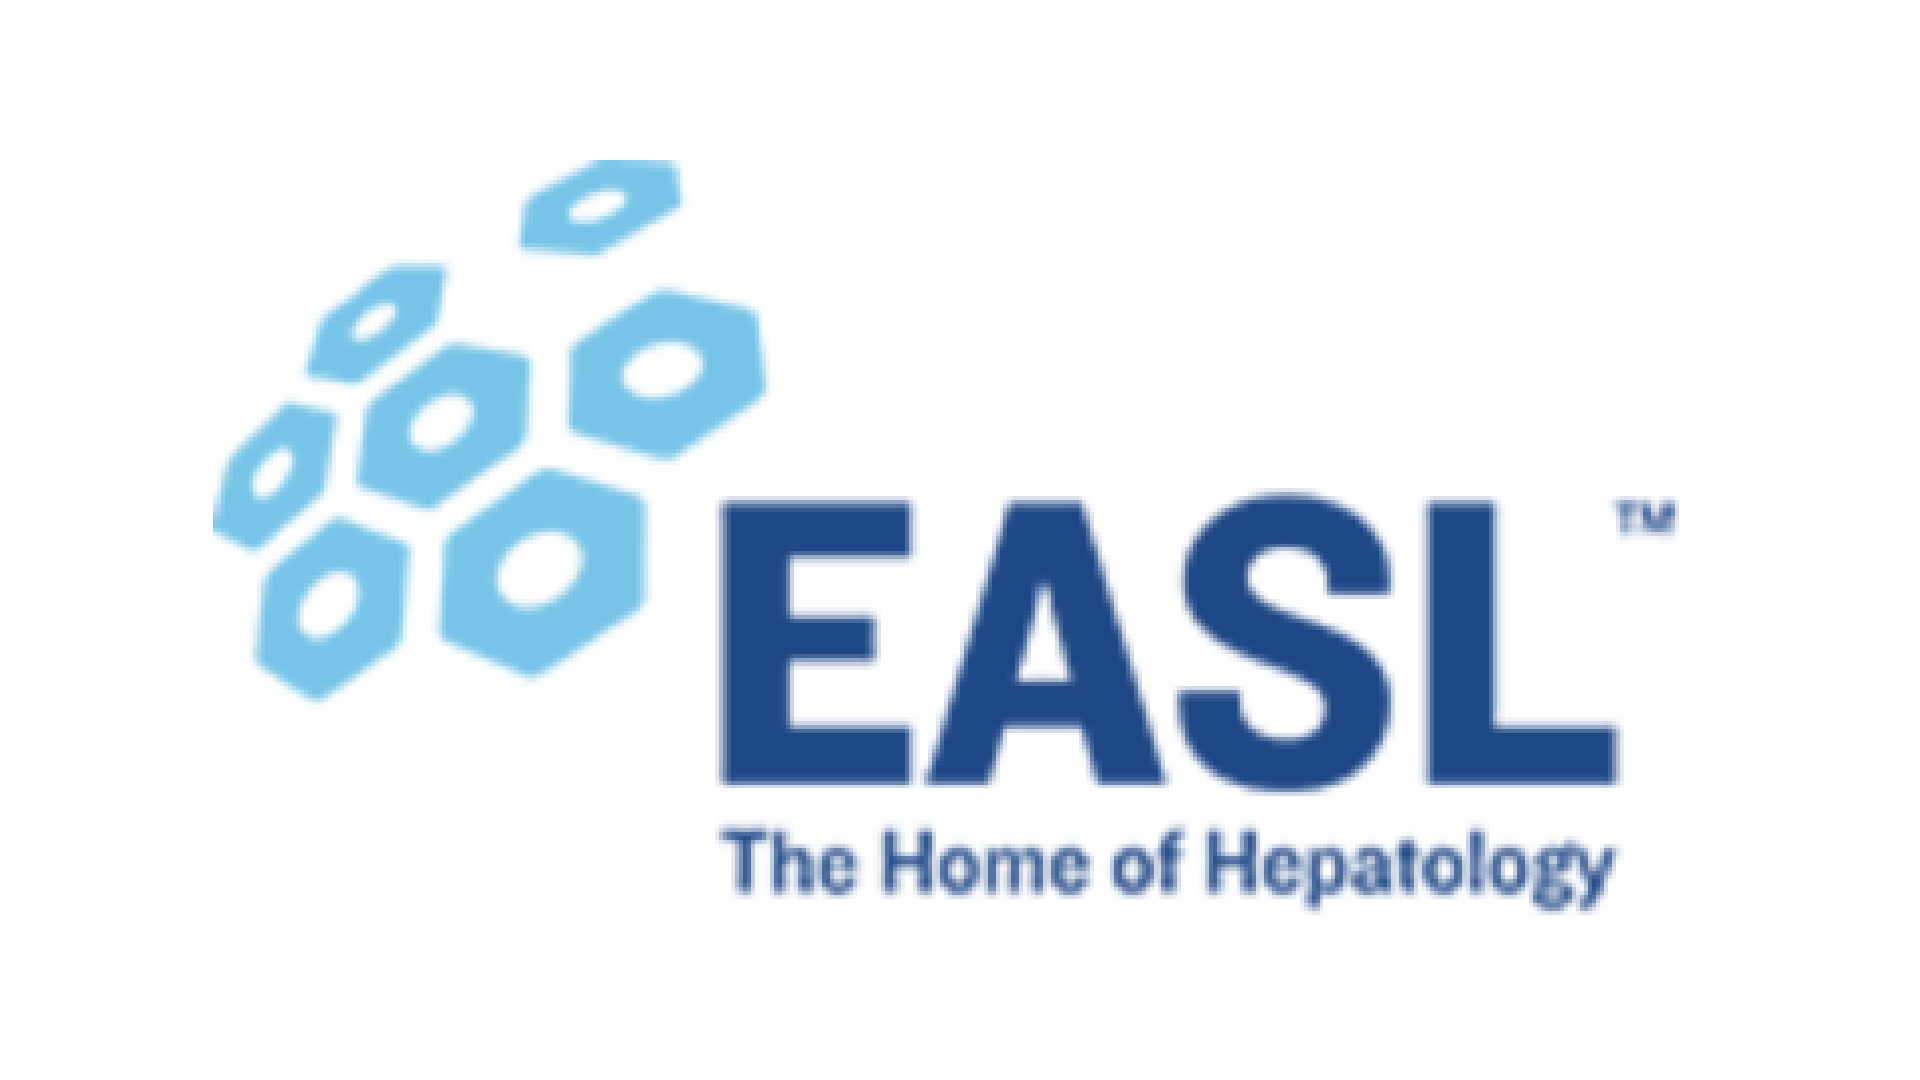 The European Association for the Study of the Liver (EASL), International Liver Congress 2022